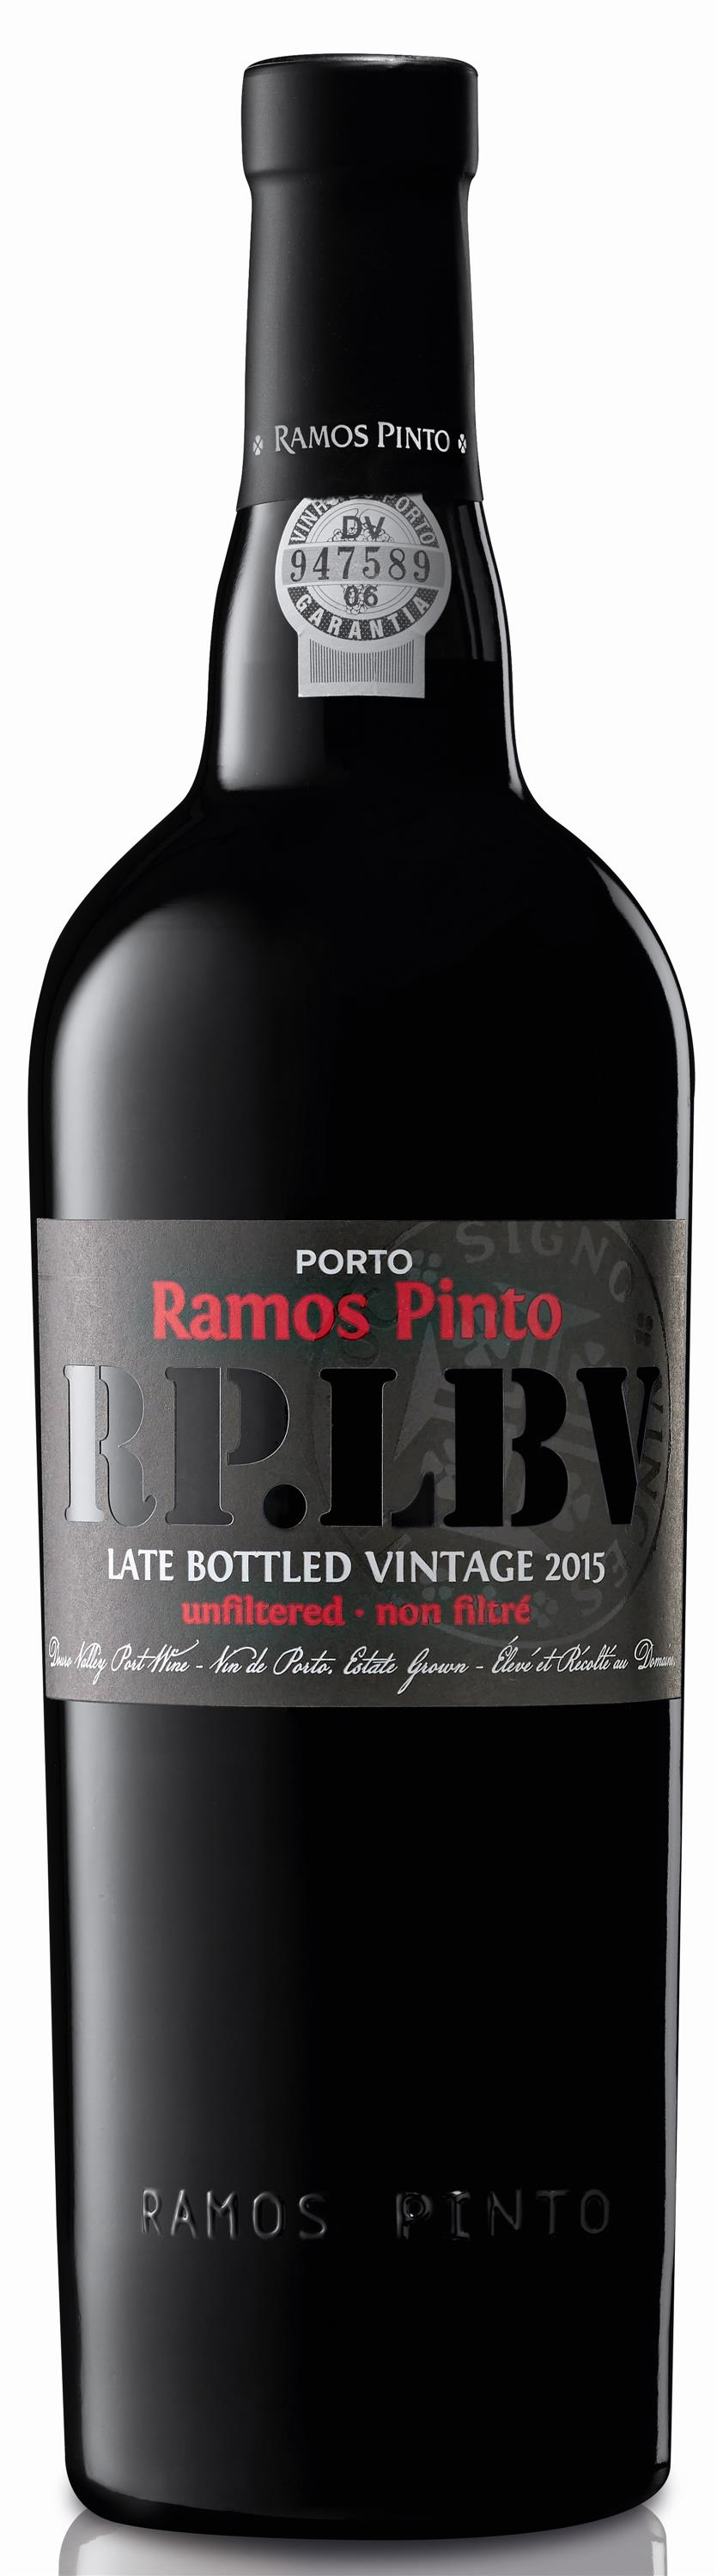 Ramos Pinto Porto LBV 2015